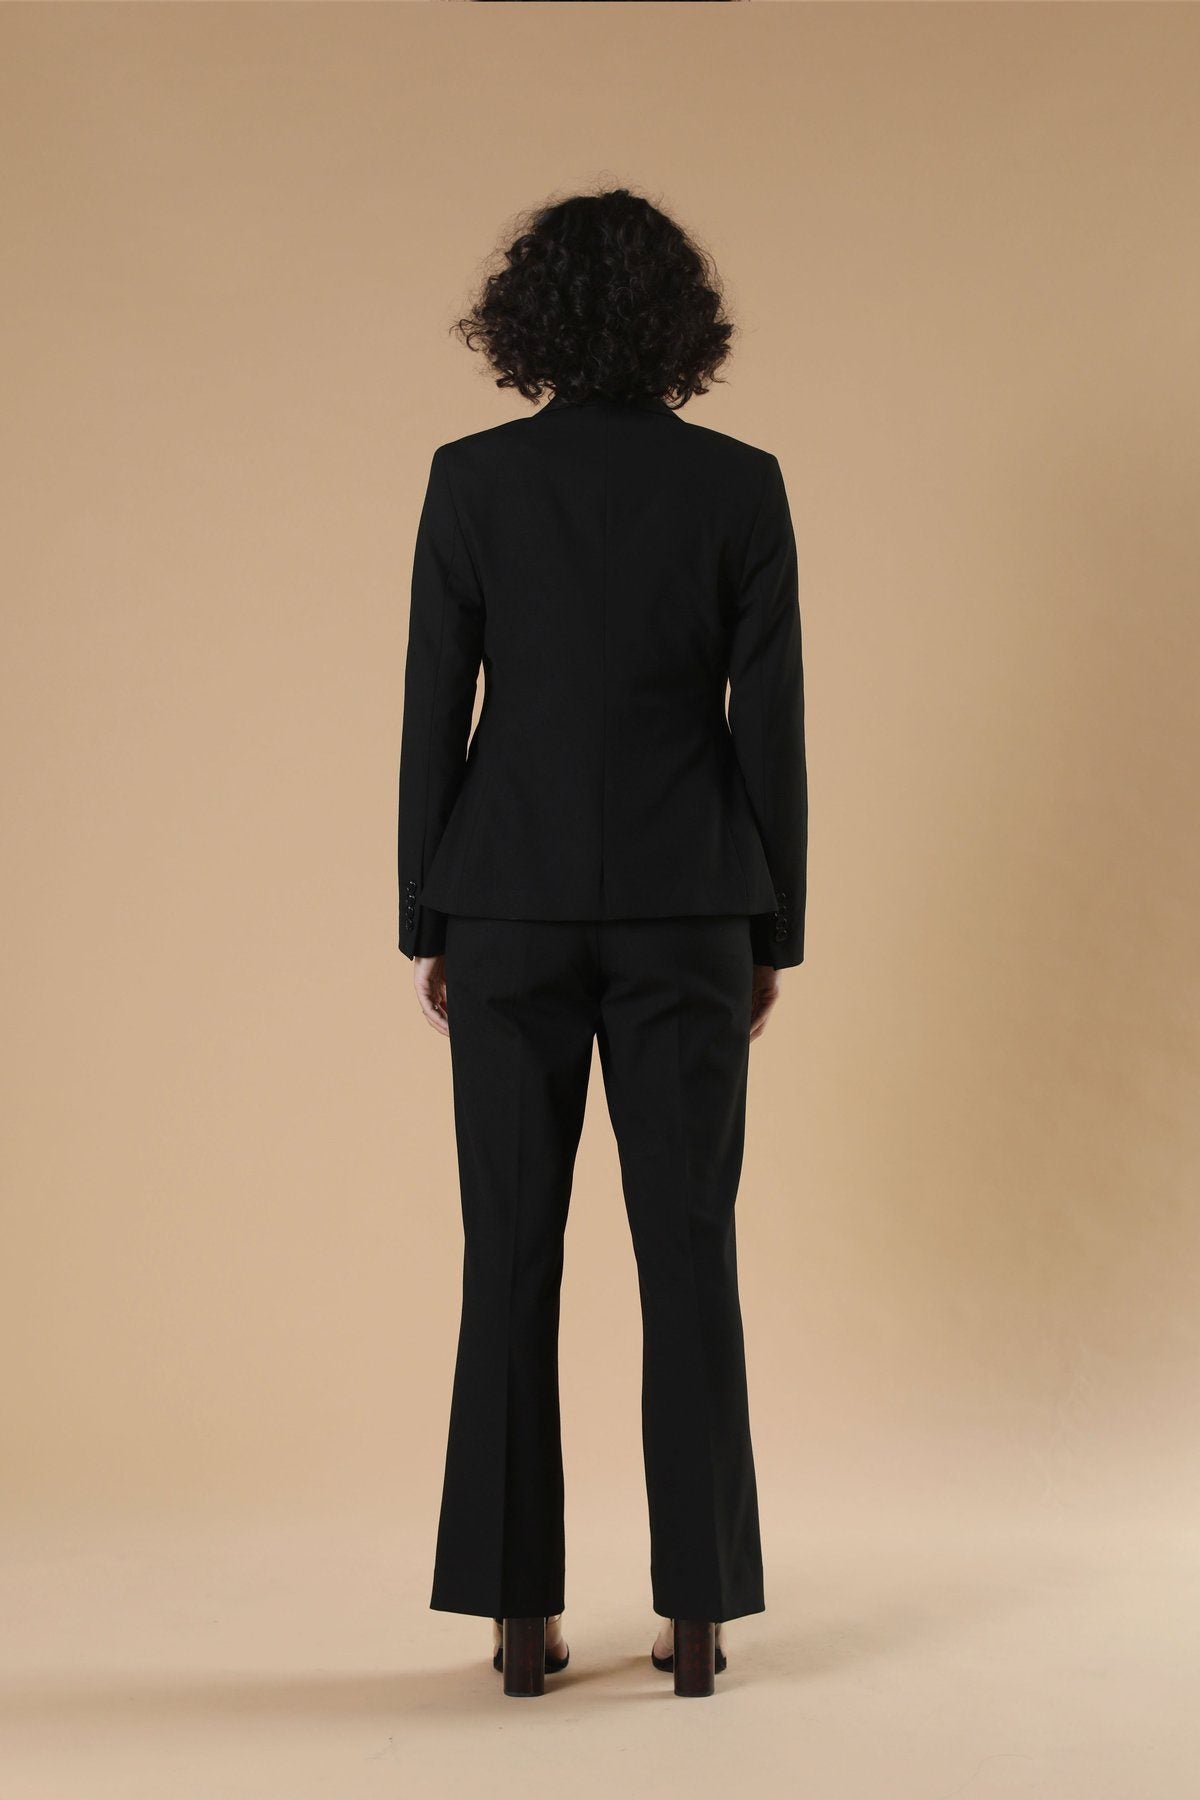 Black Womens Suit, Formal Pantsuit for Women, Black Formal Wear